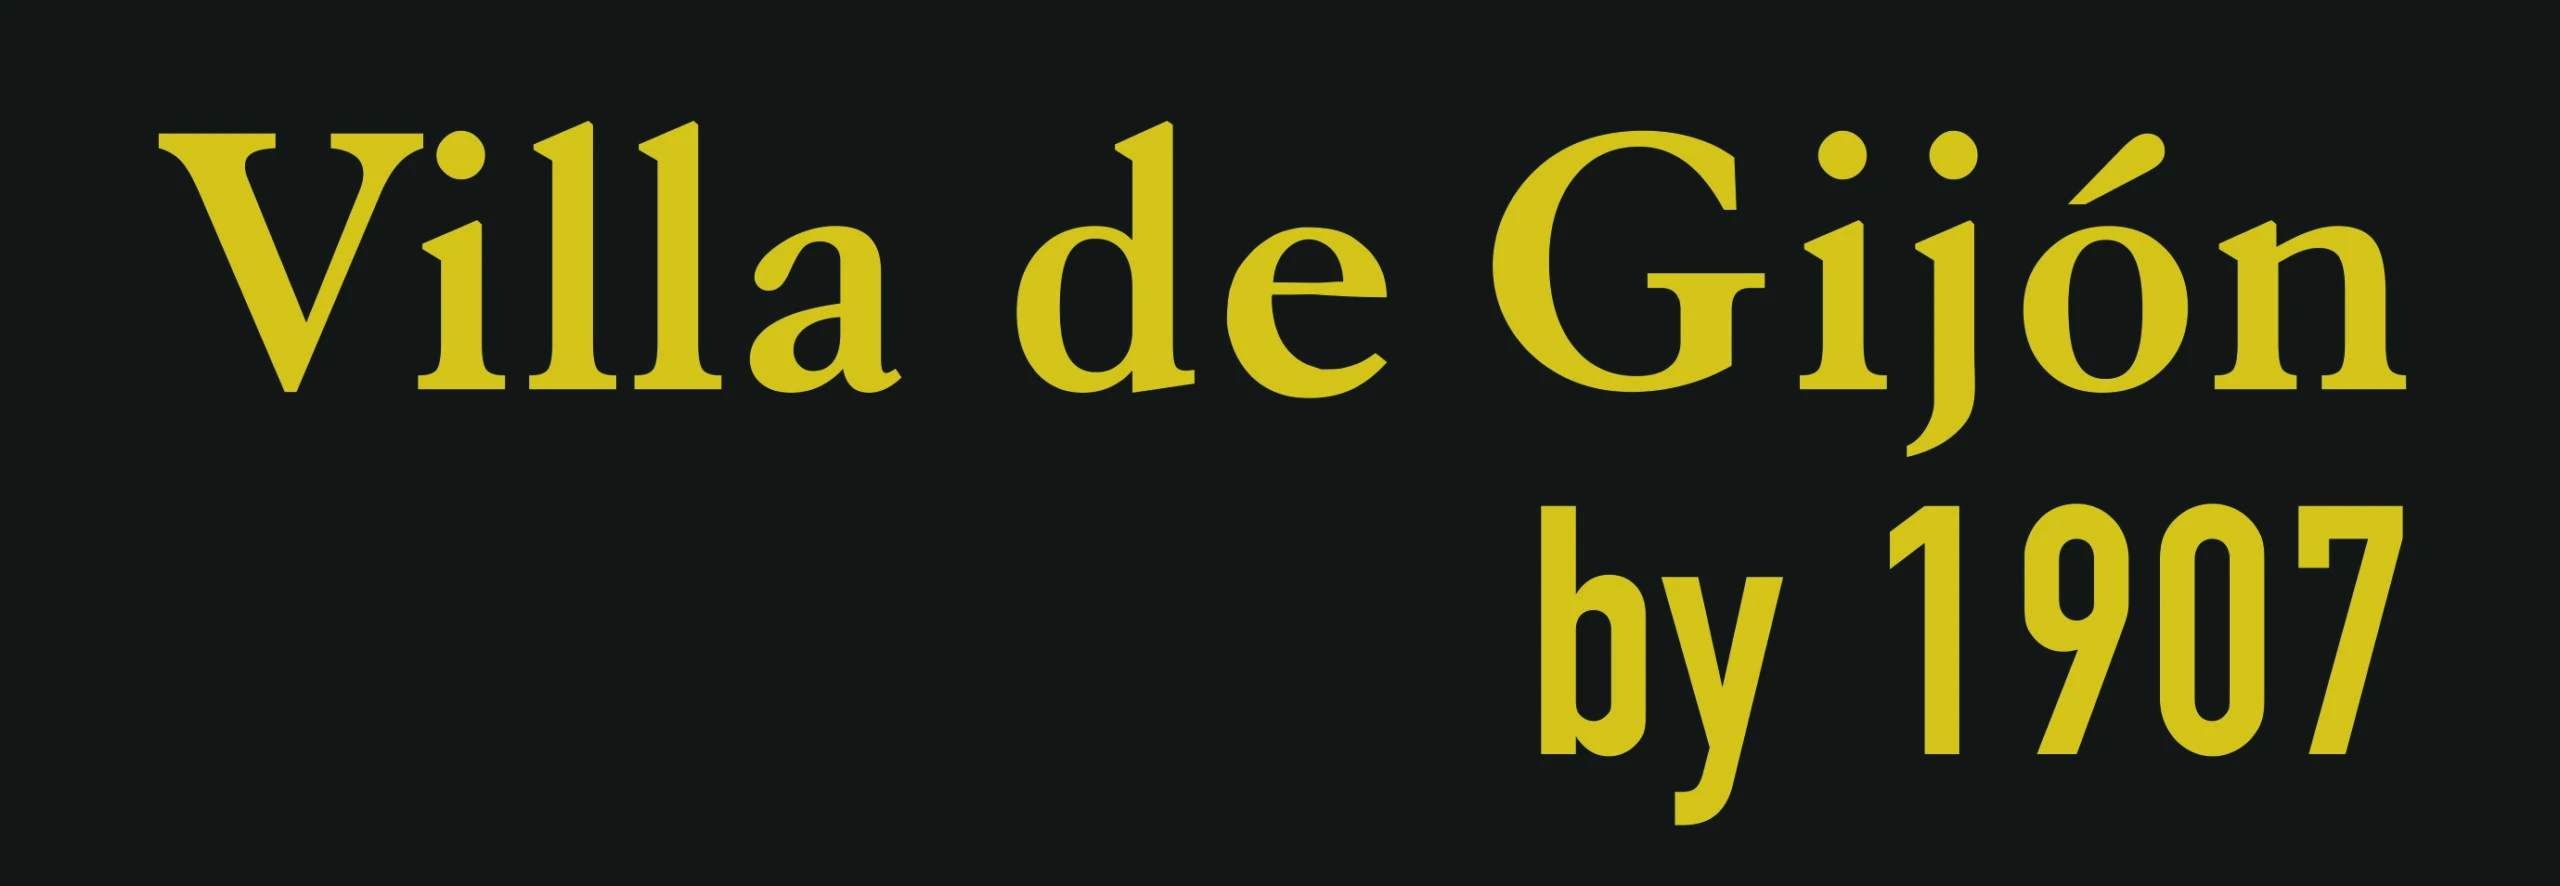 logo-villa-de-gijon-by-1907-ok-scaled.jpg